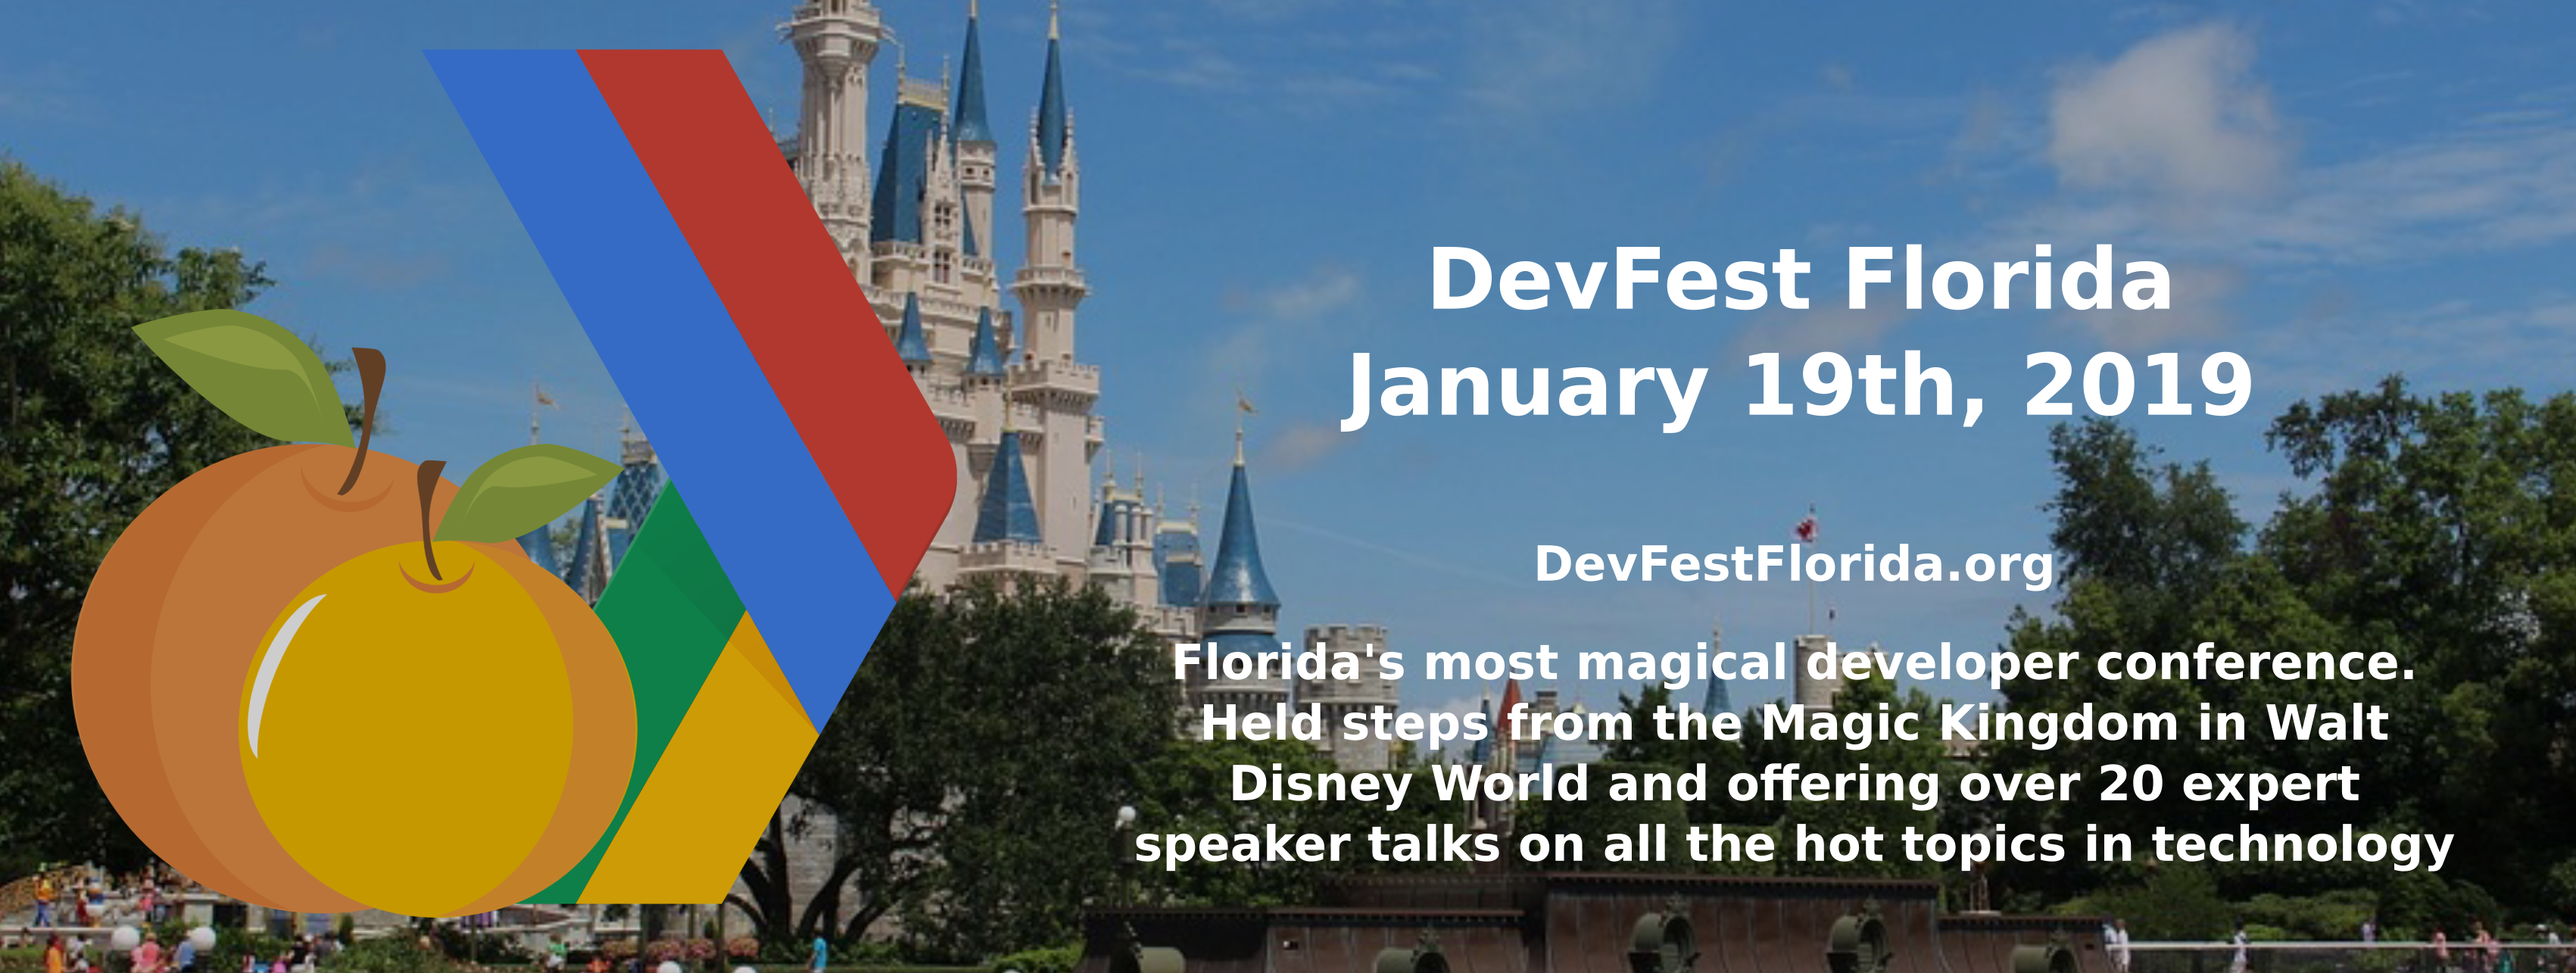 DevFest Florida